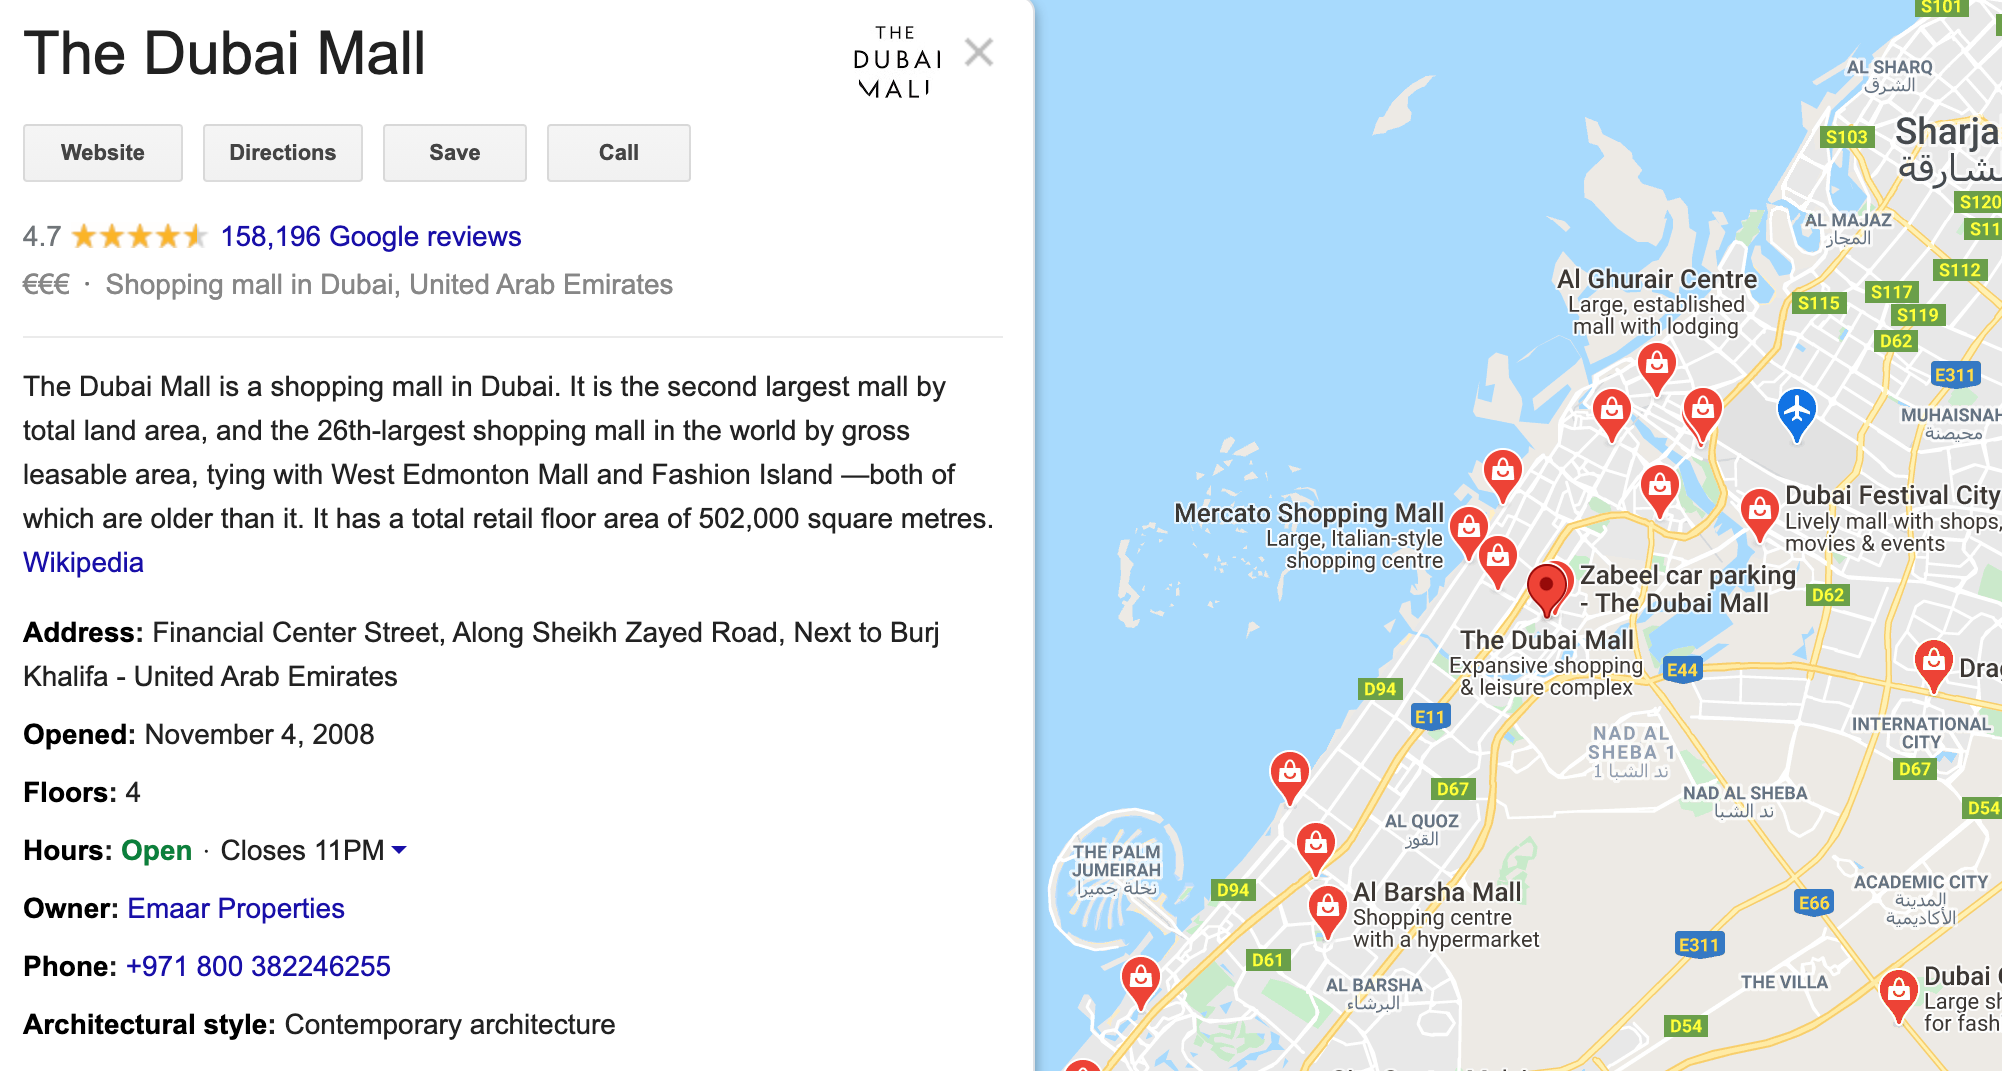 Dubai Mall GMB listing on Google Maps